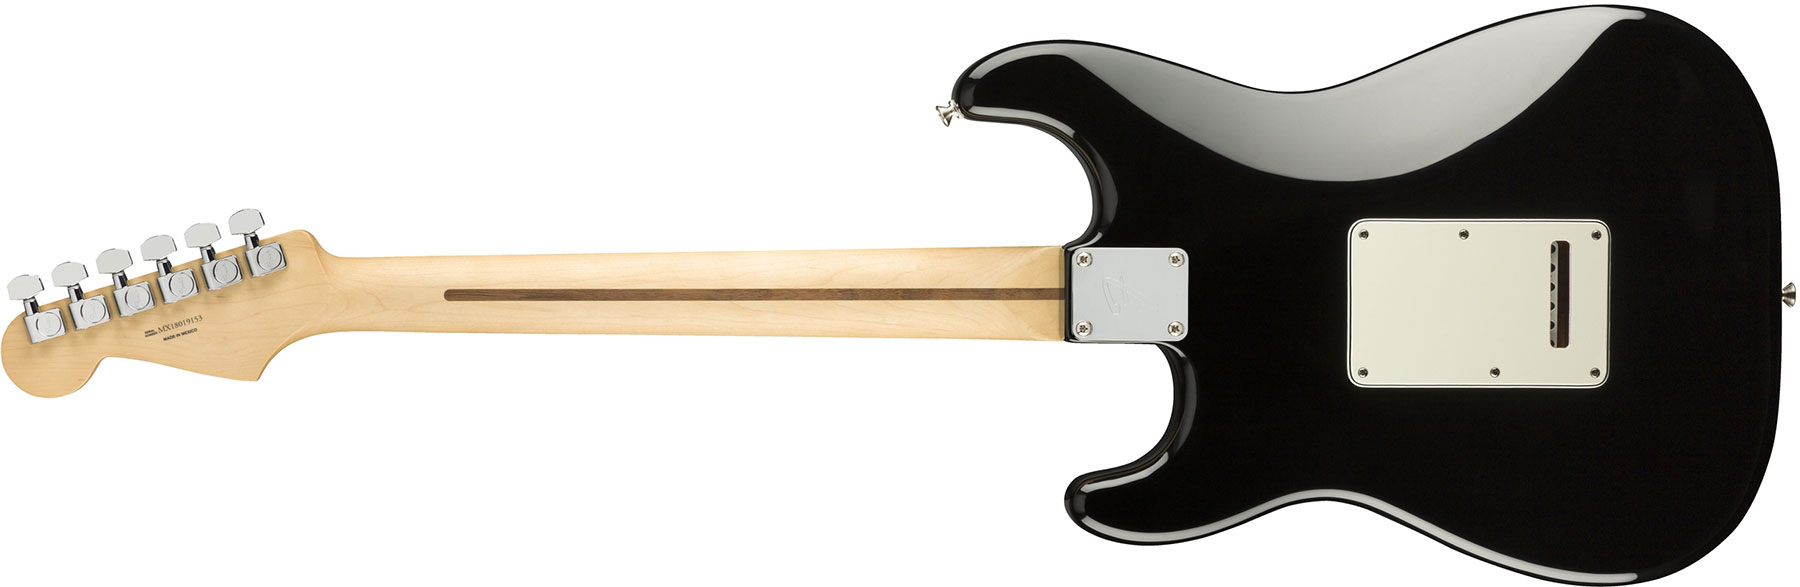 Fender Strat Player Mex Hss Pf - Black - Guitare Électrique Forme Str - Variation 1